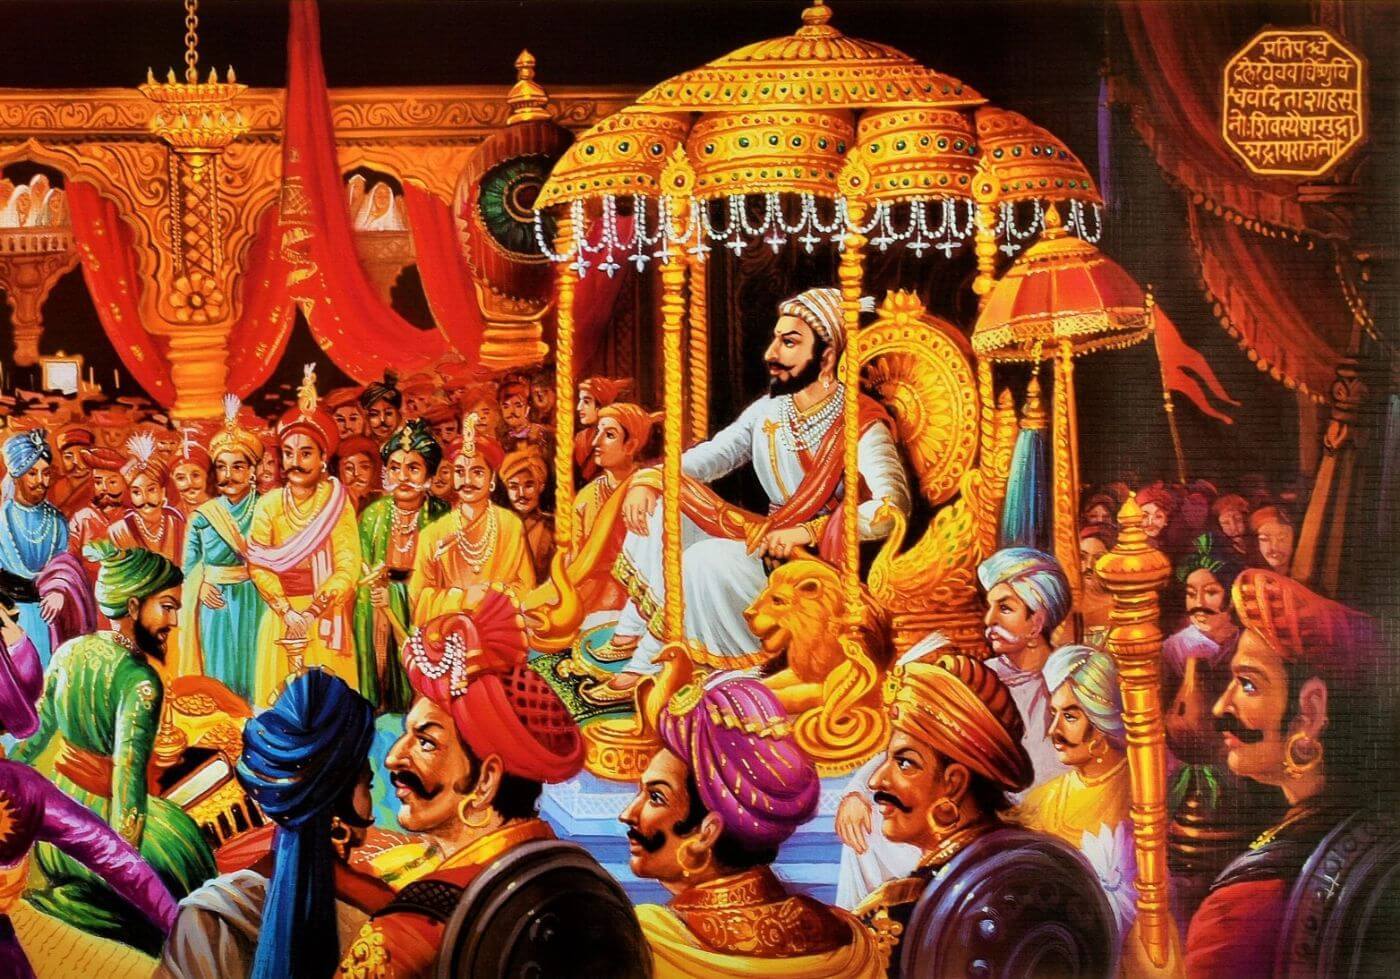 Chattarapati Shivaji Maharaj Coronation Painting - Art Prints by ...